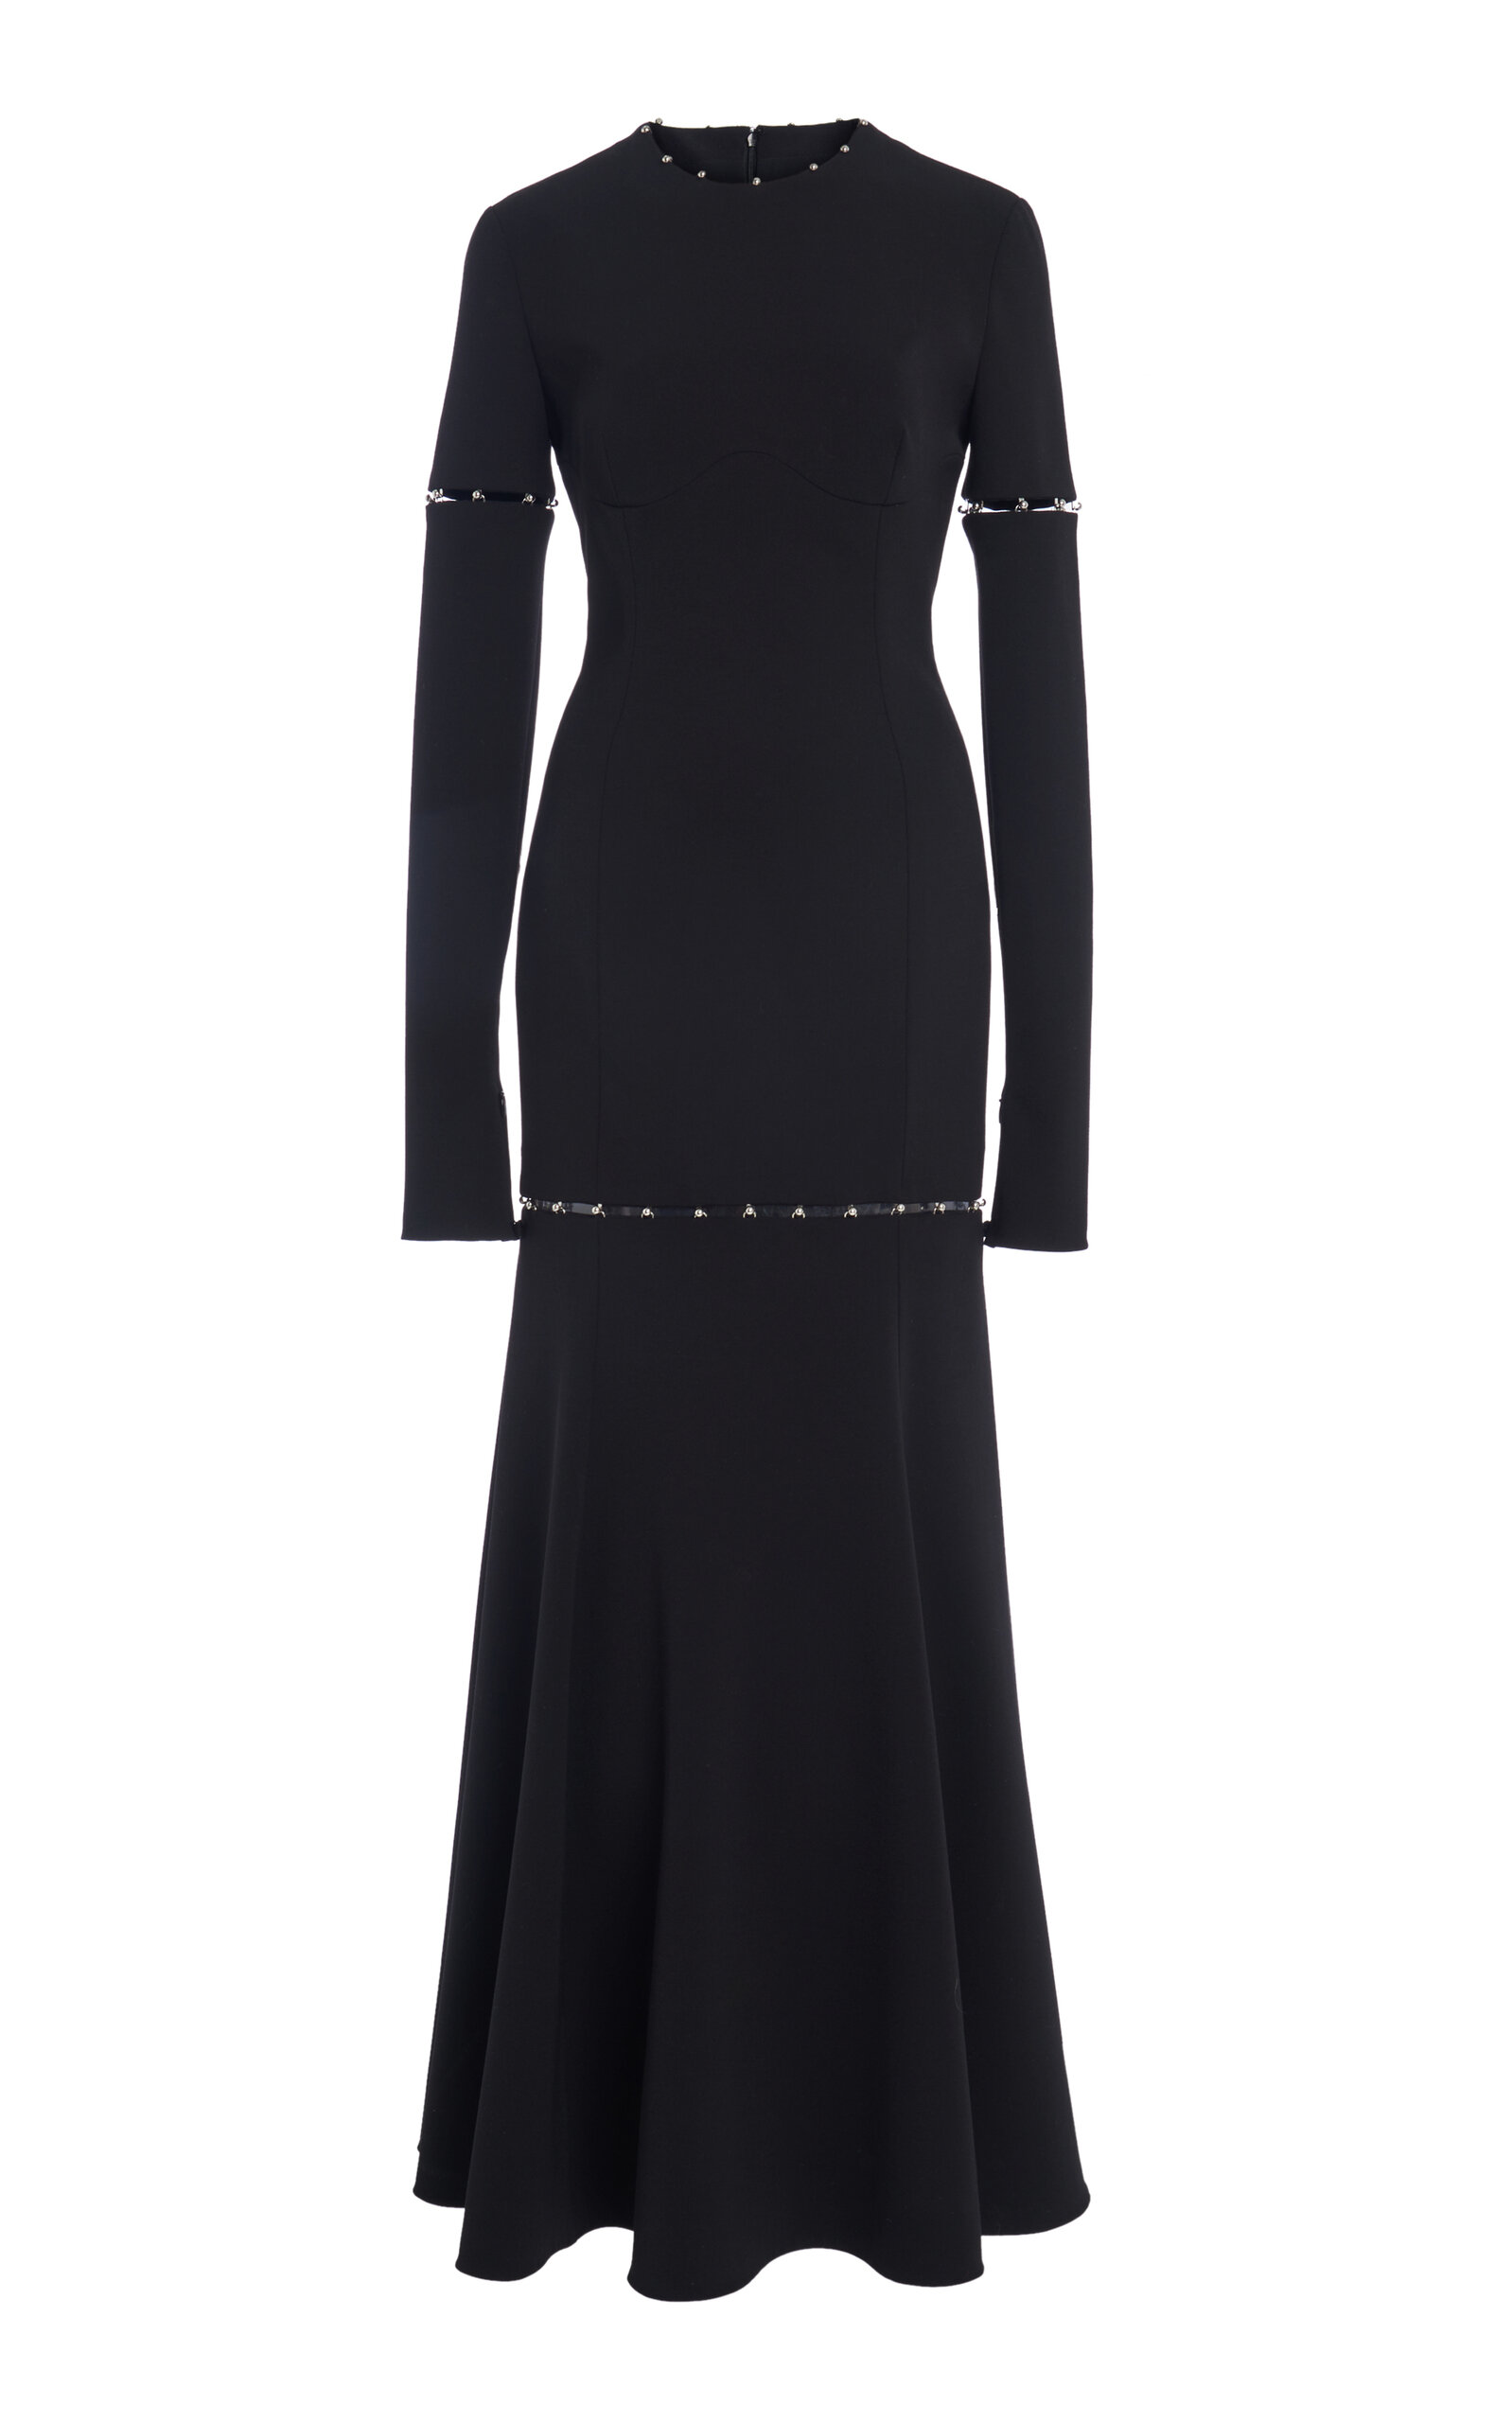 Del Core Deconstructed Midi Dress In Black